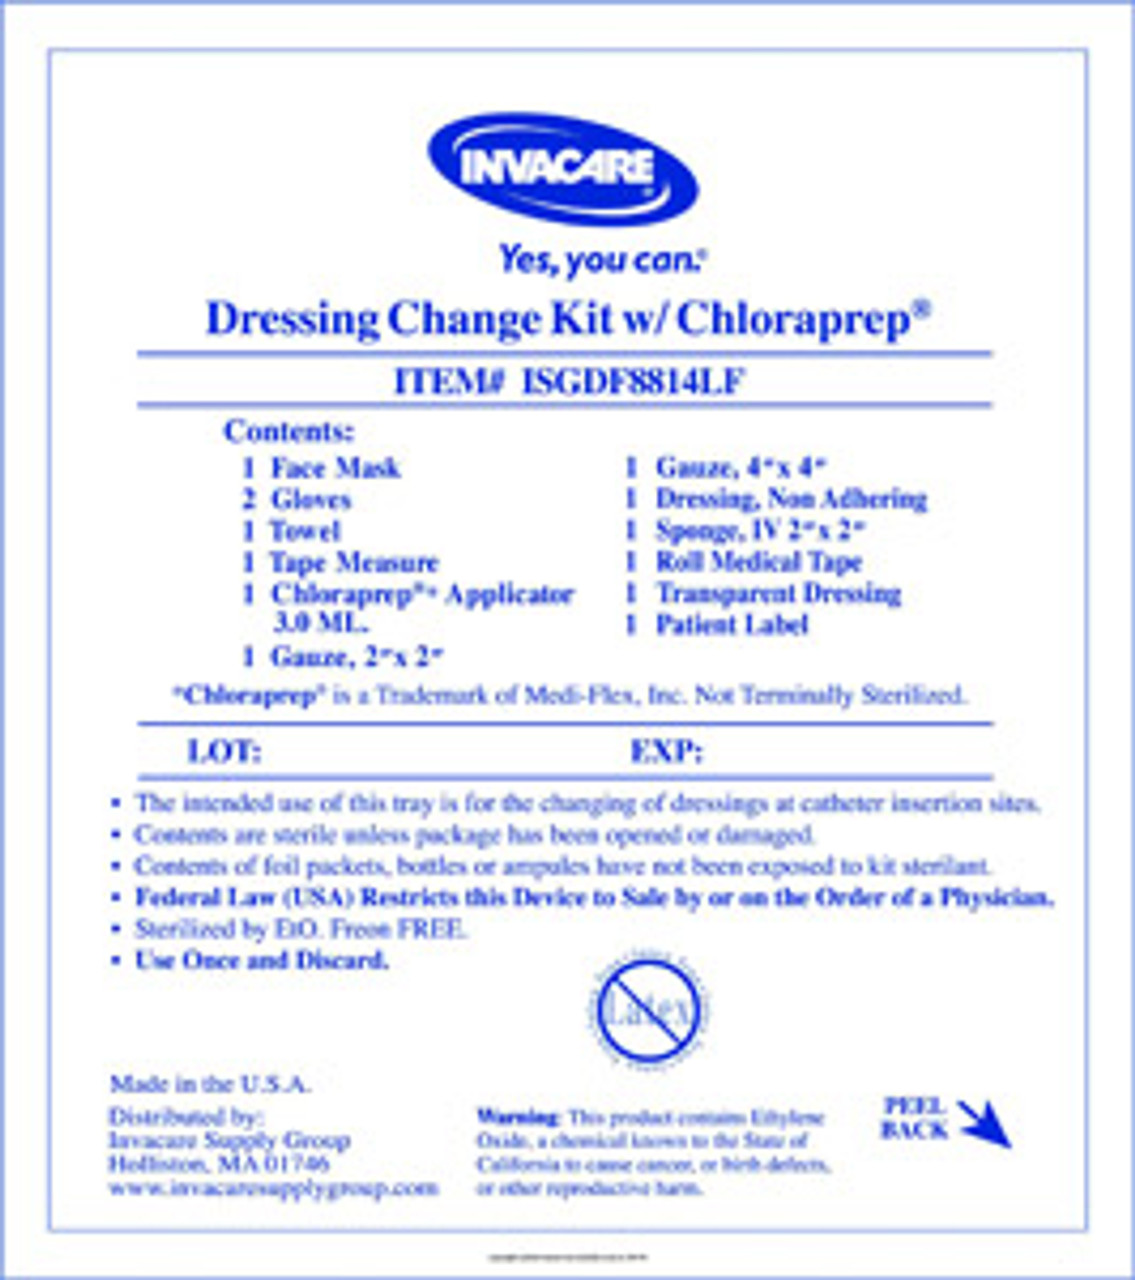 Central Line Dressing Change Kit with Chloraprep ISGDF8814LFCS